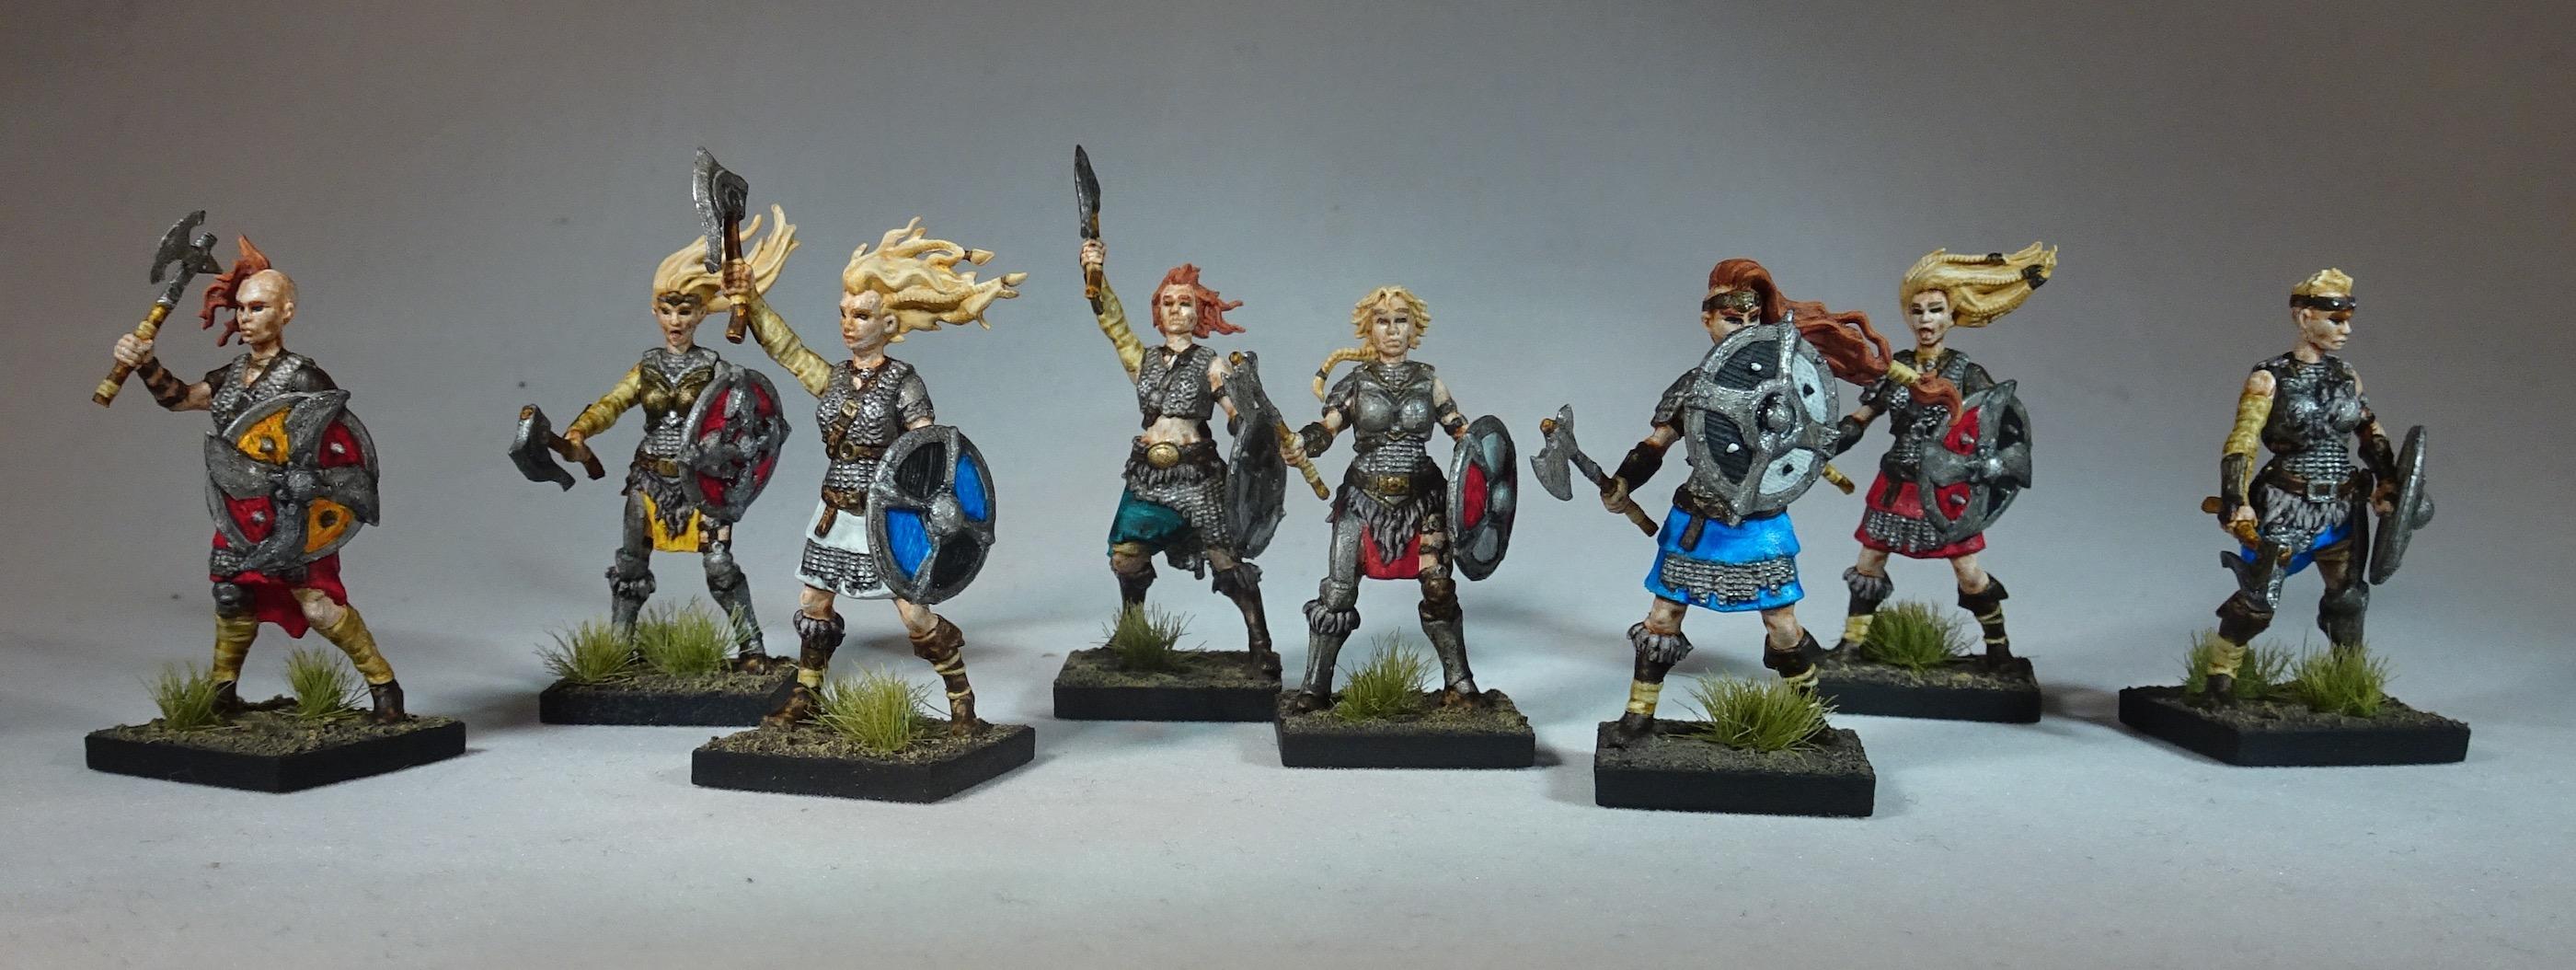 Albion, Celts, Shieldwolf Miniatures Shieldmaiden Warriors, Vikings